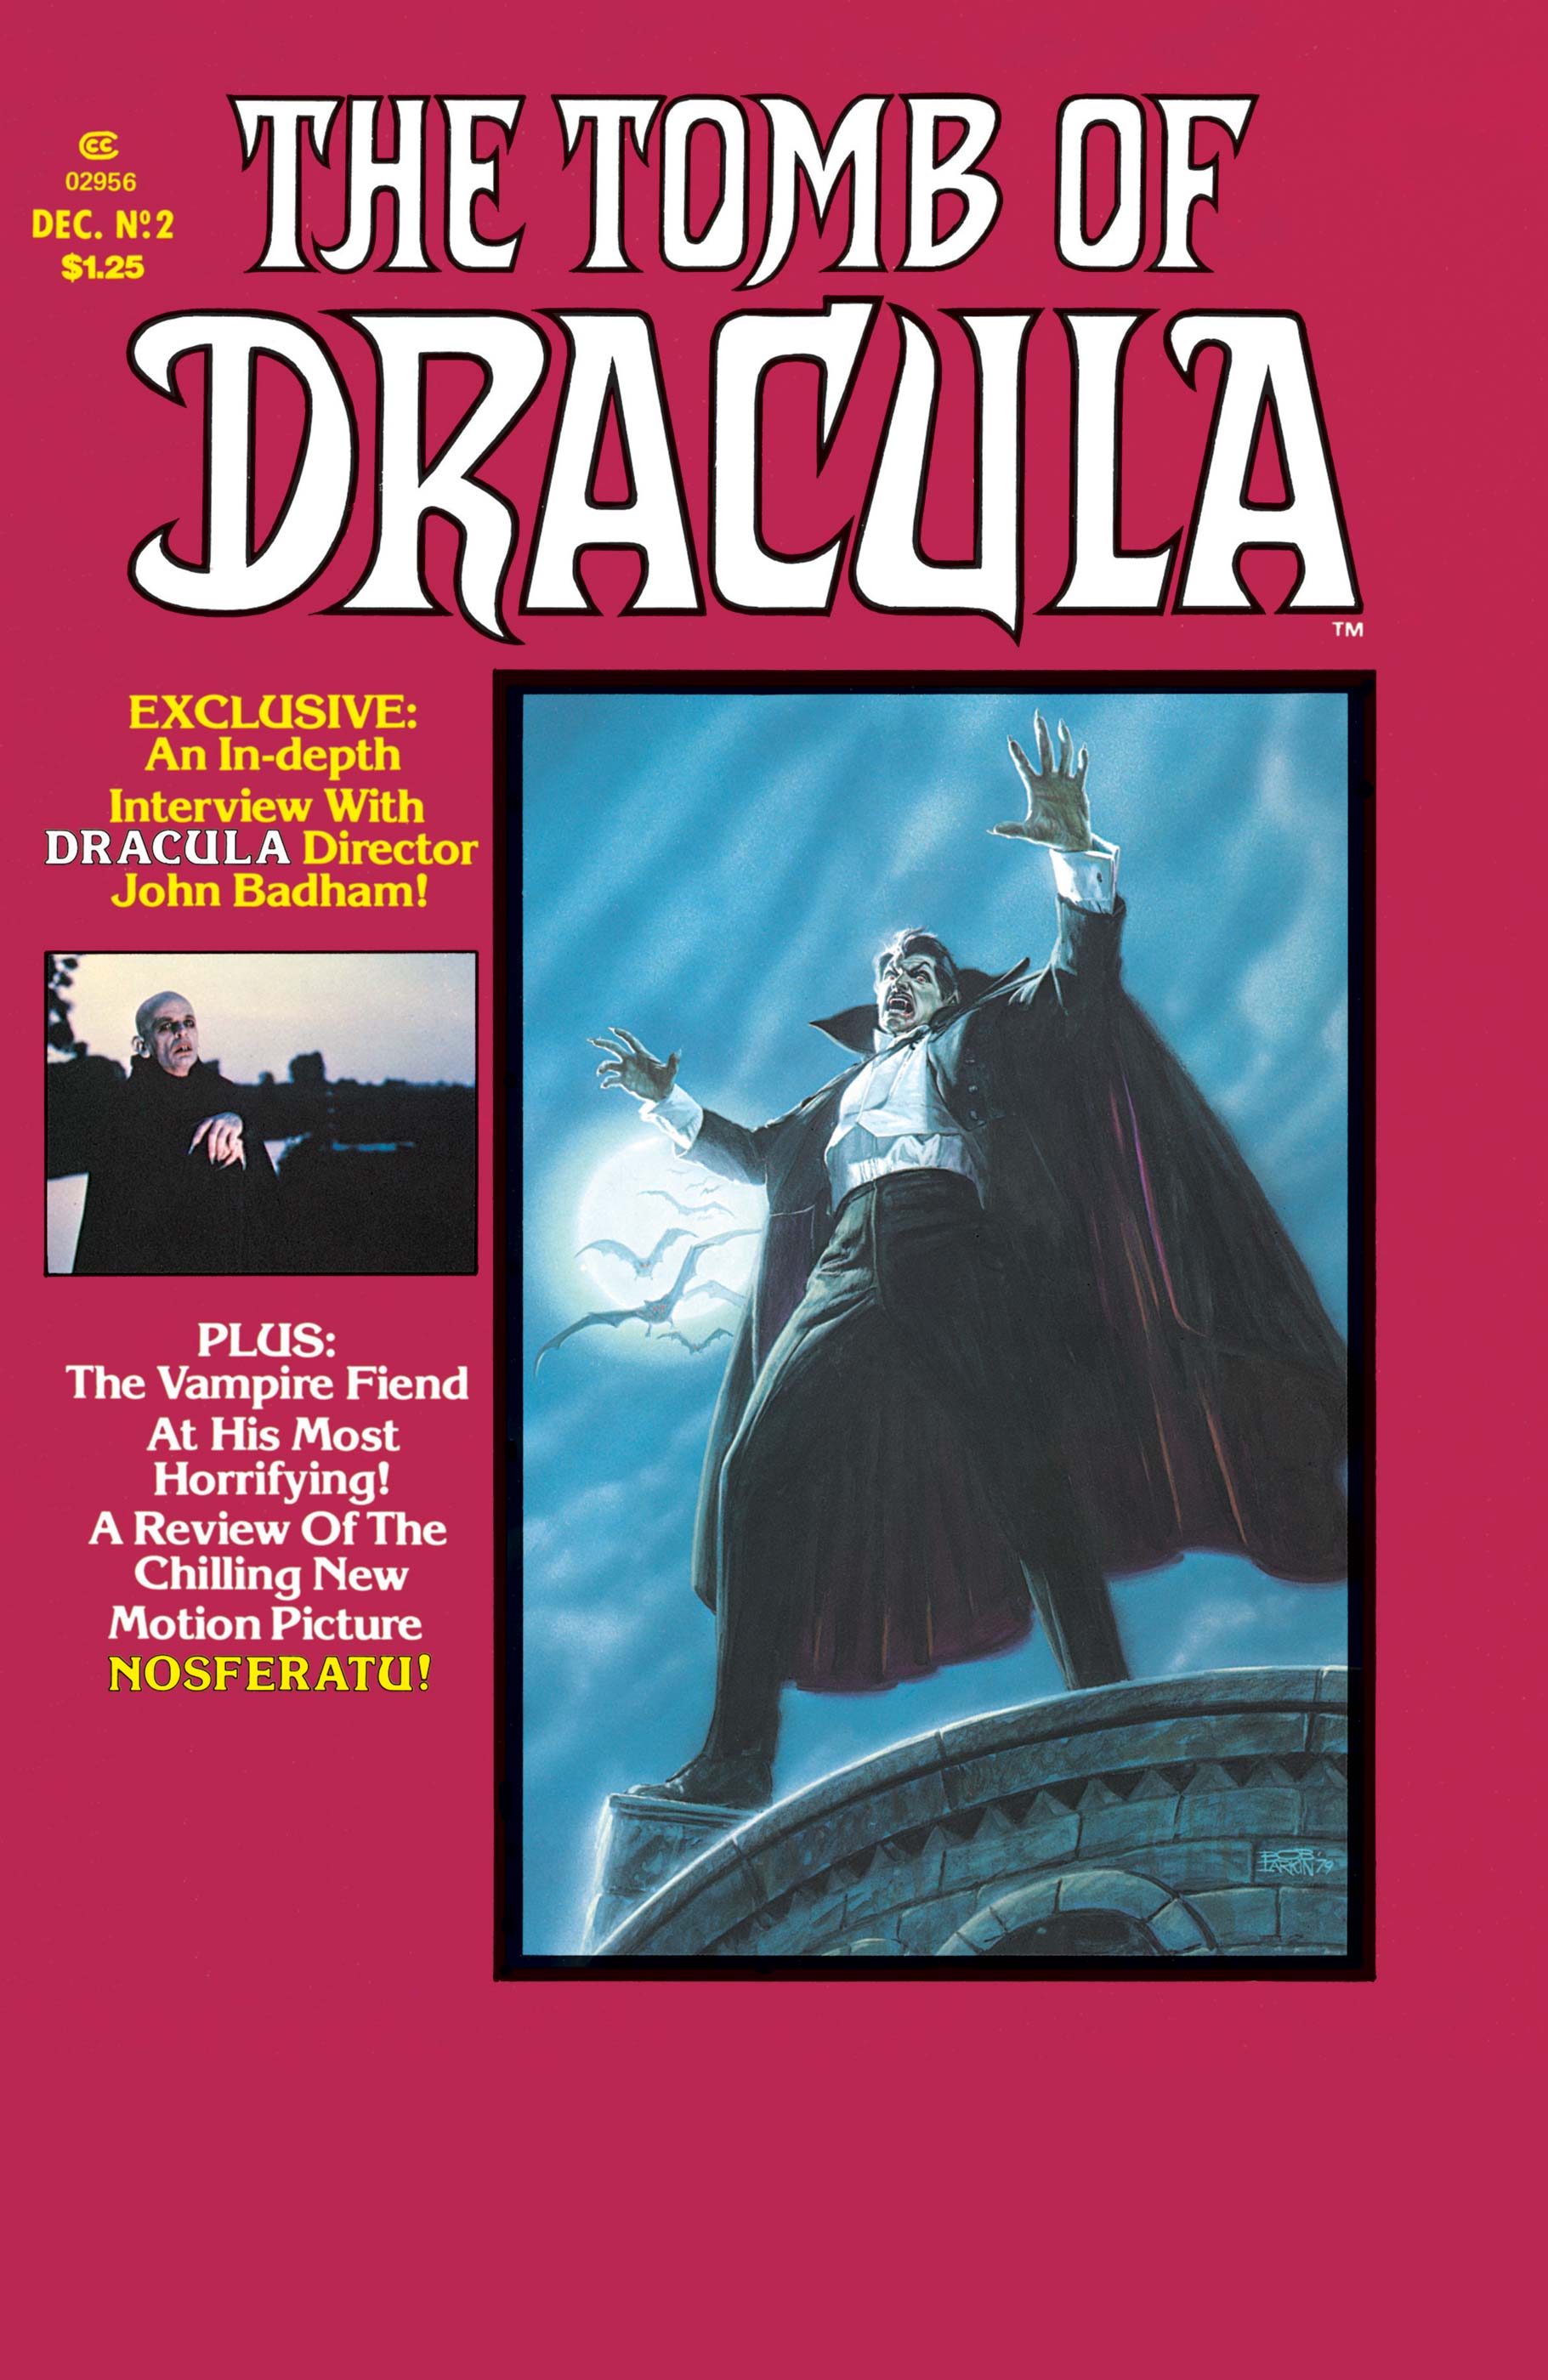 Tomb of Dracula (1979) #2